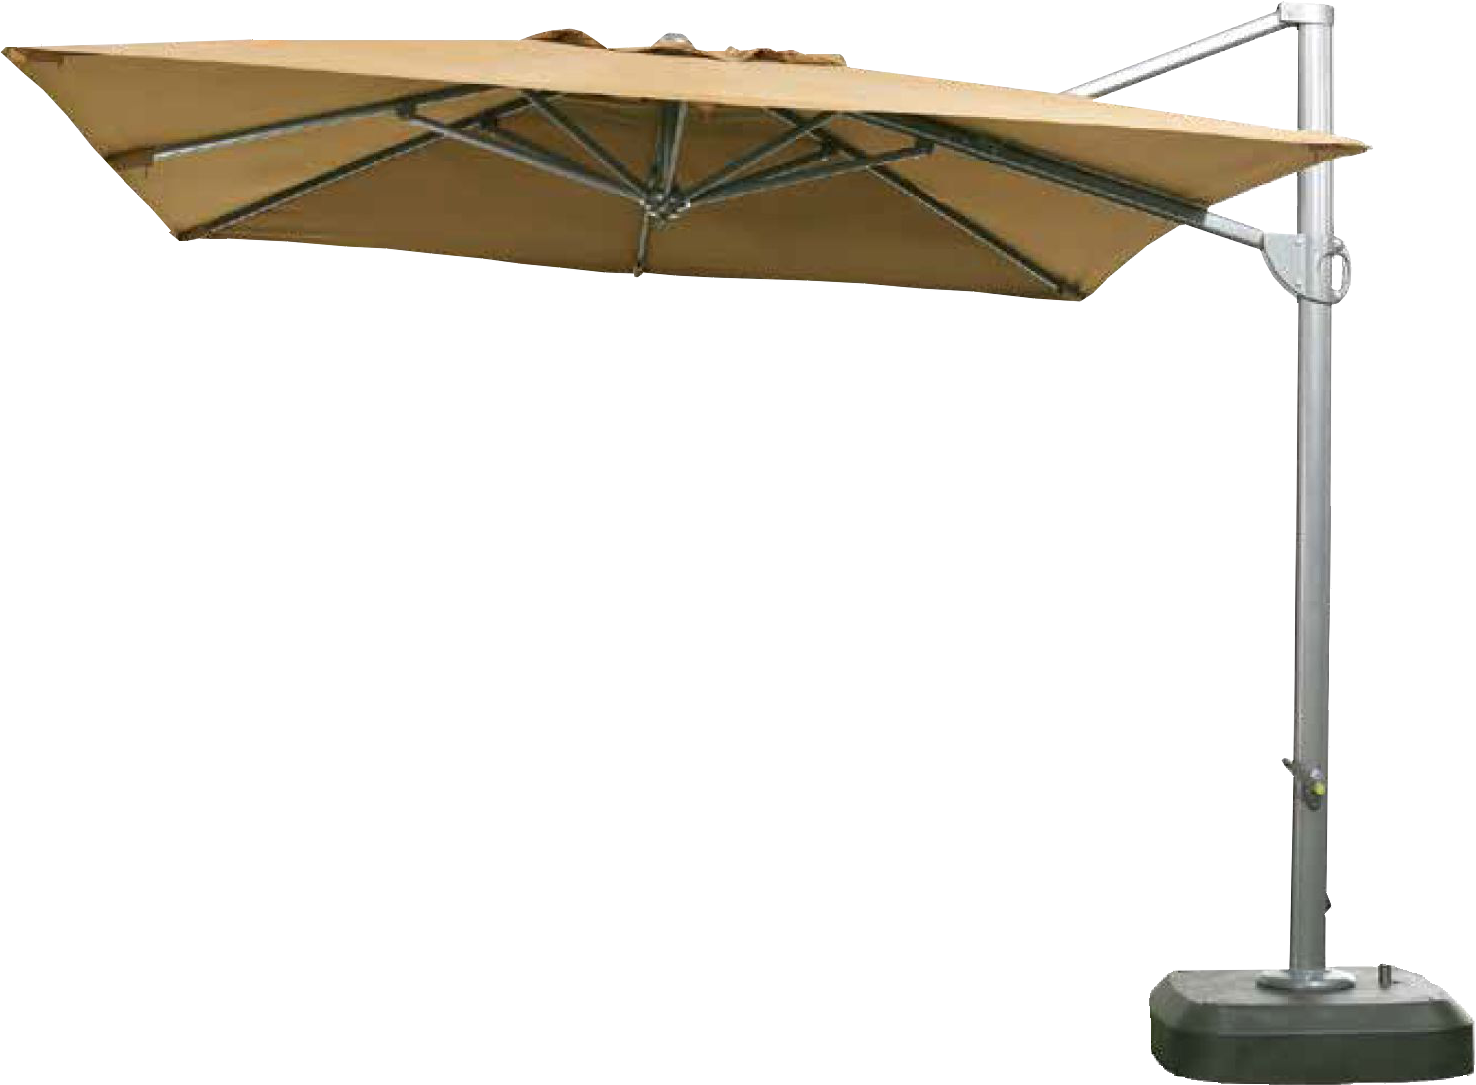 ZENI Sombrilla colgante cuadrada de aluminio con Tela sunbrella antique beige